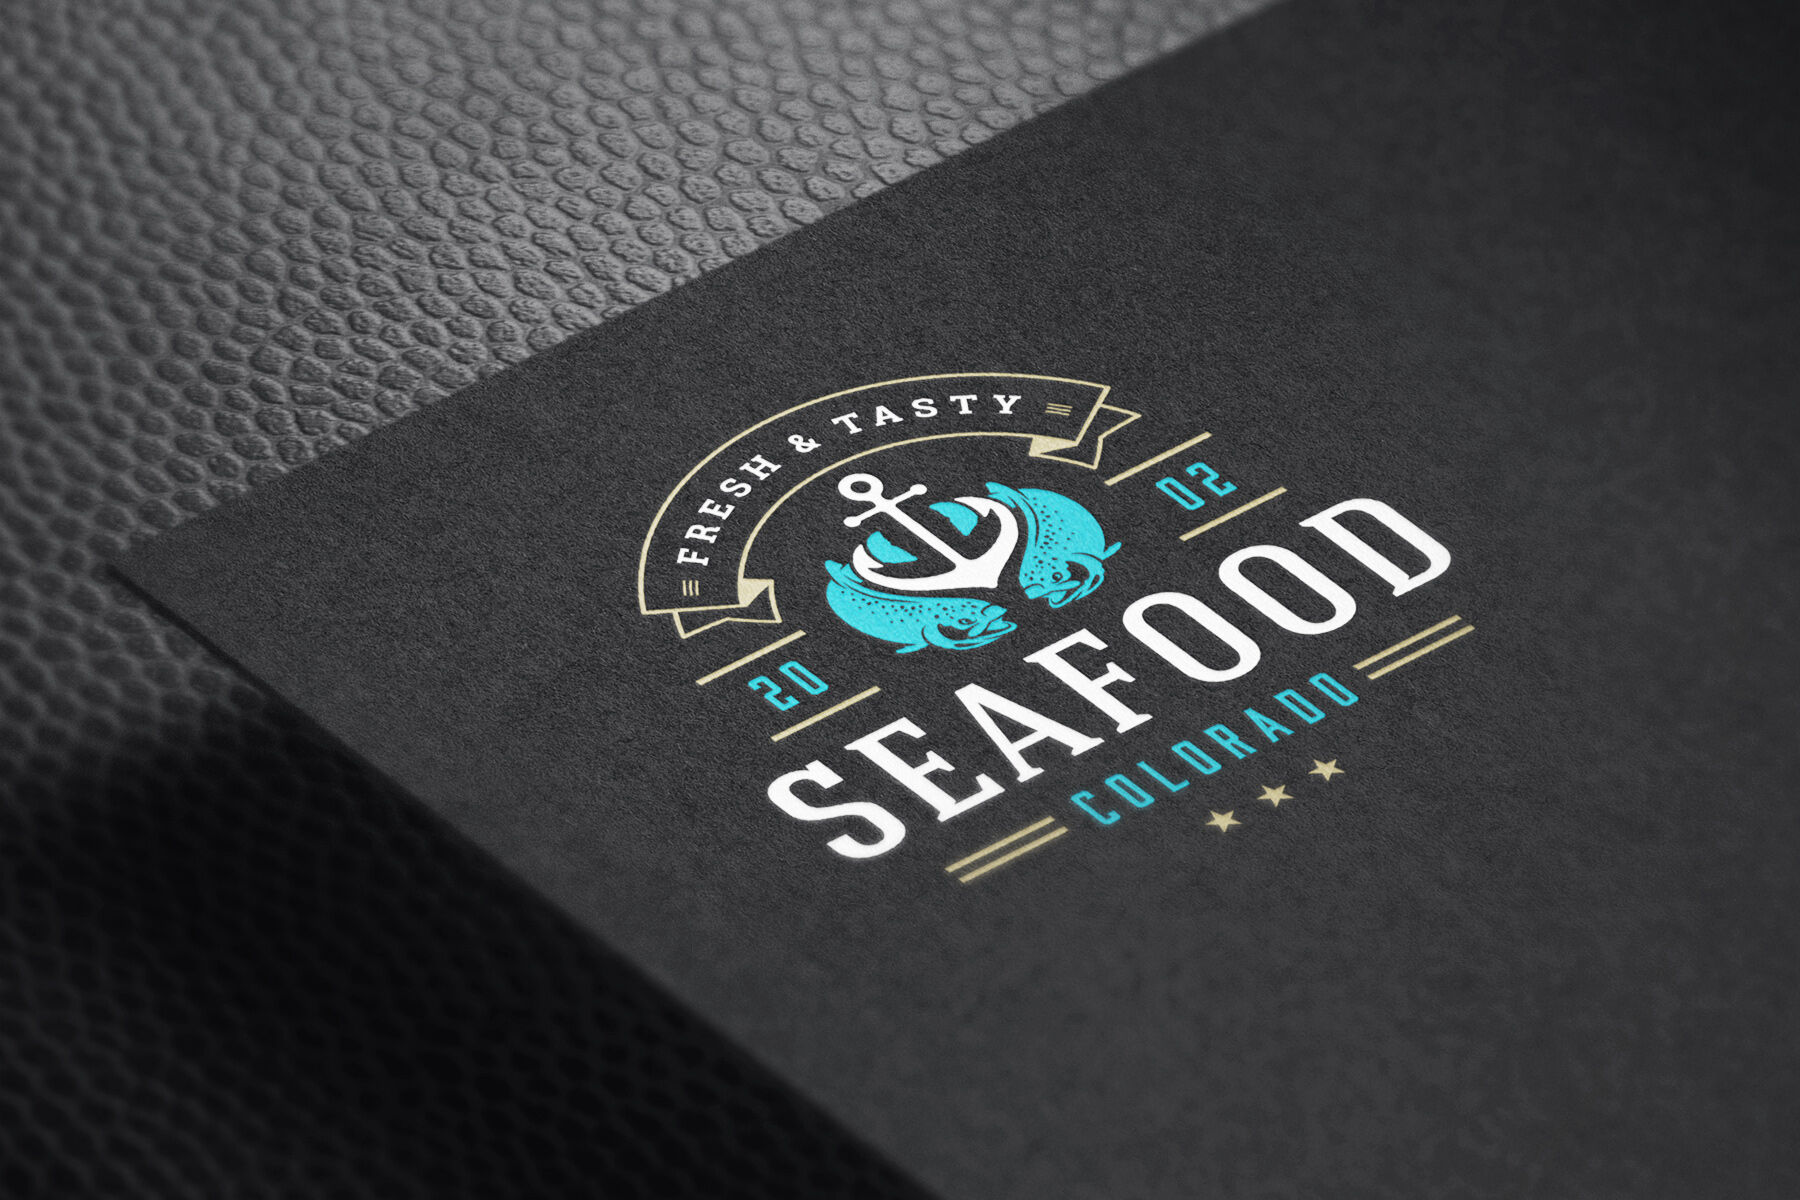 seafood restaurant logo and design